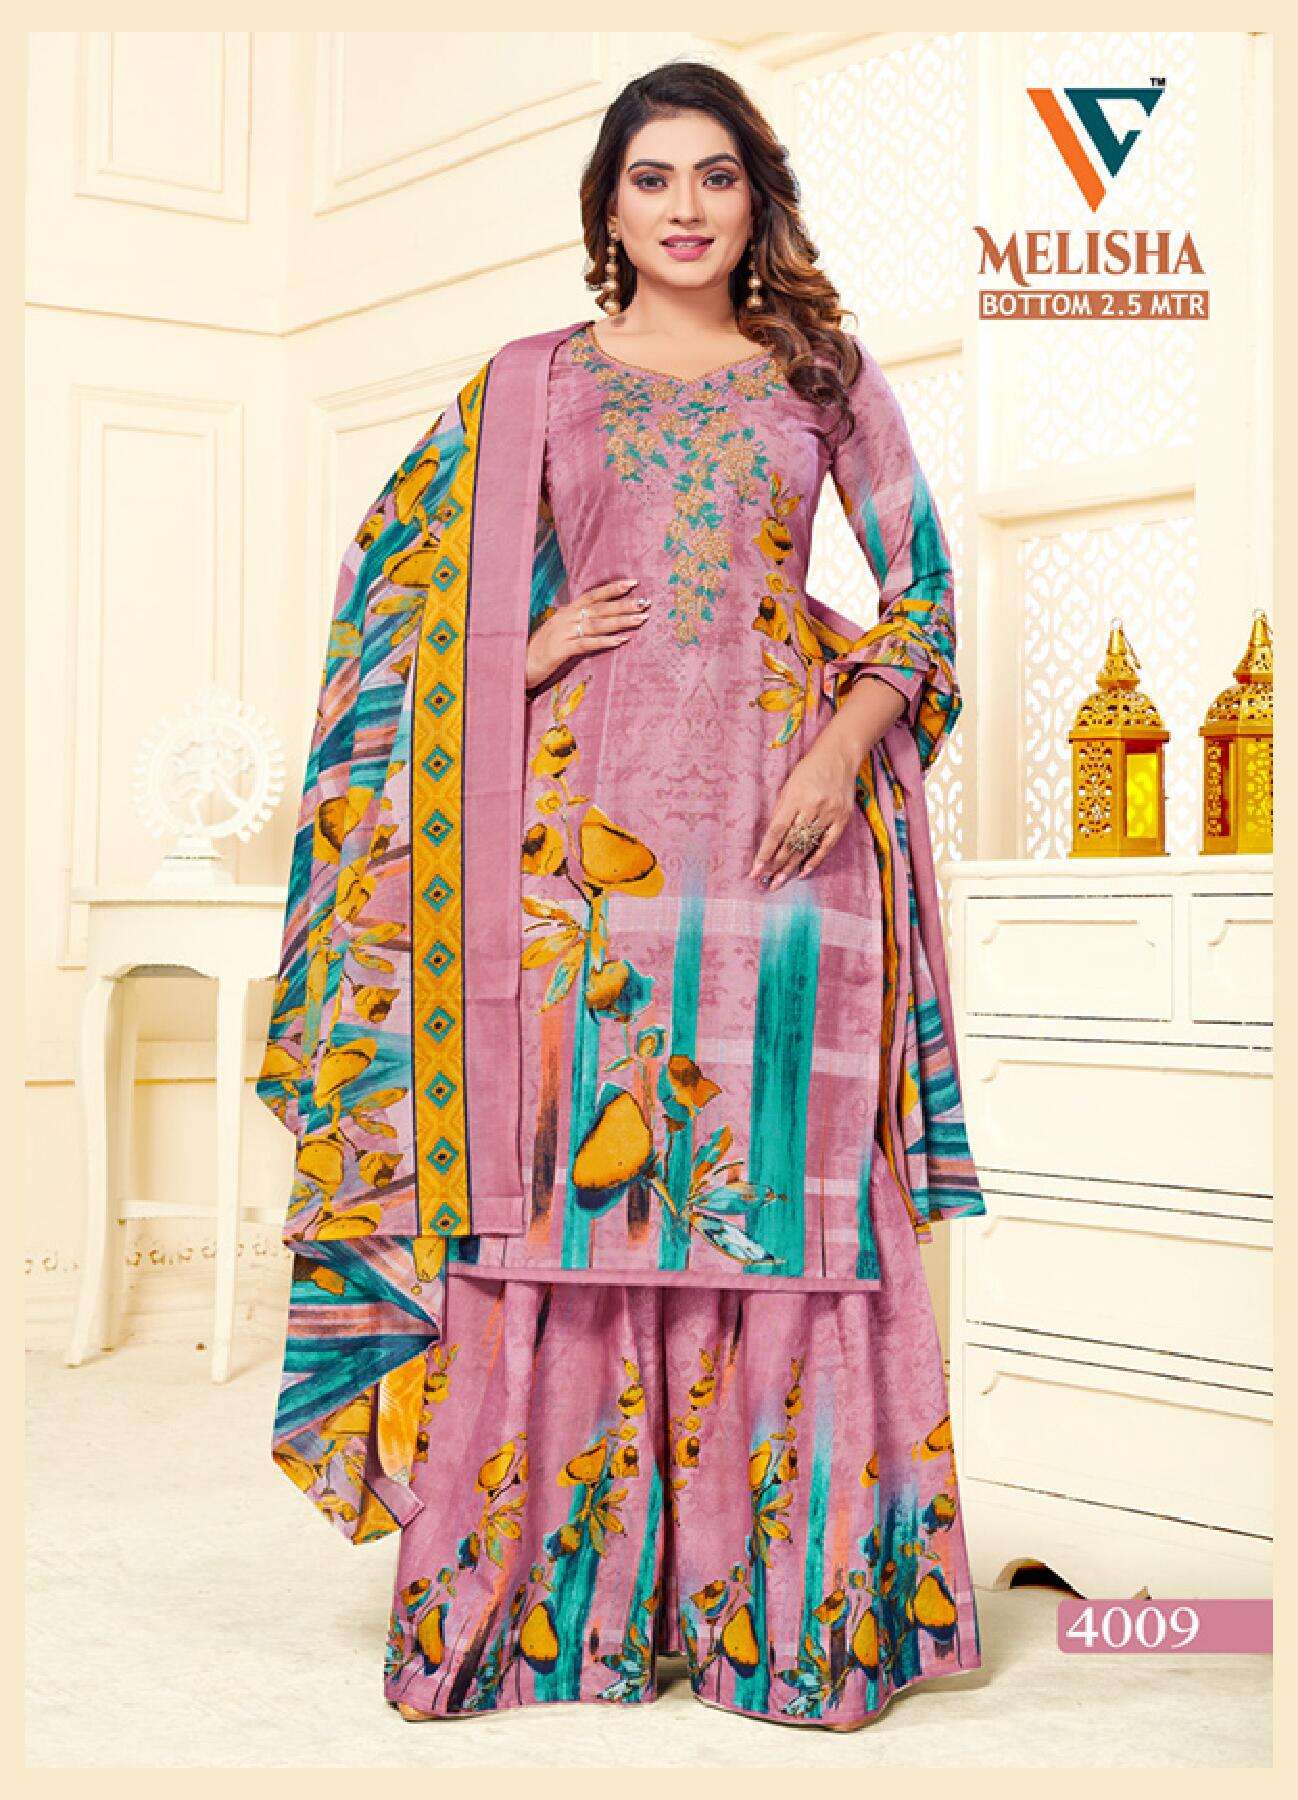 Vandana C Melisha Vol 4 Cotton Dress Material Wholesale catalog